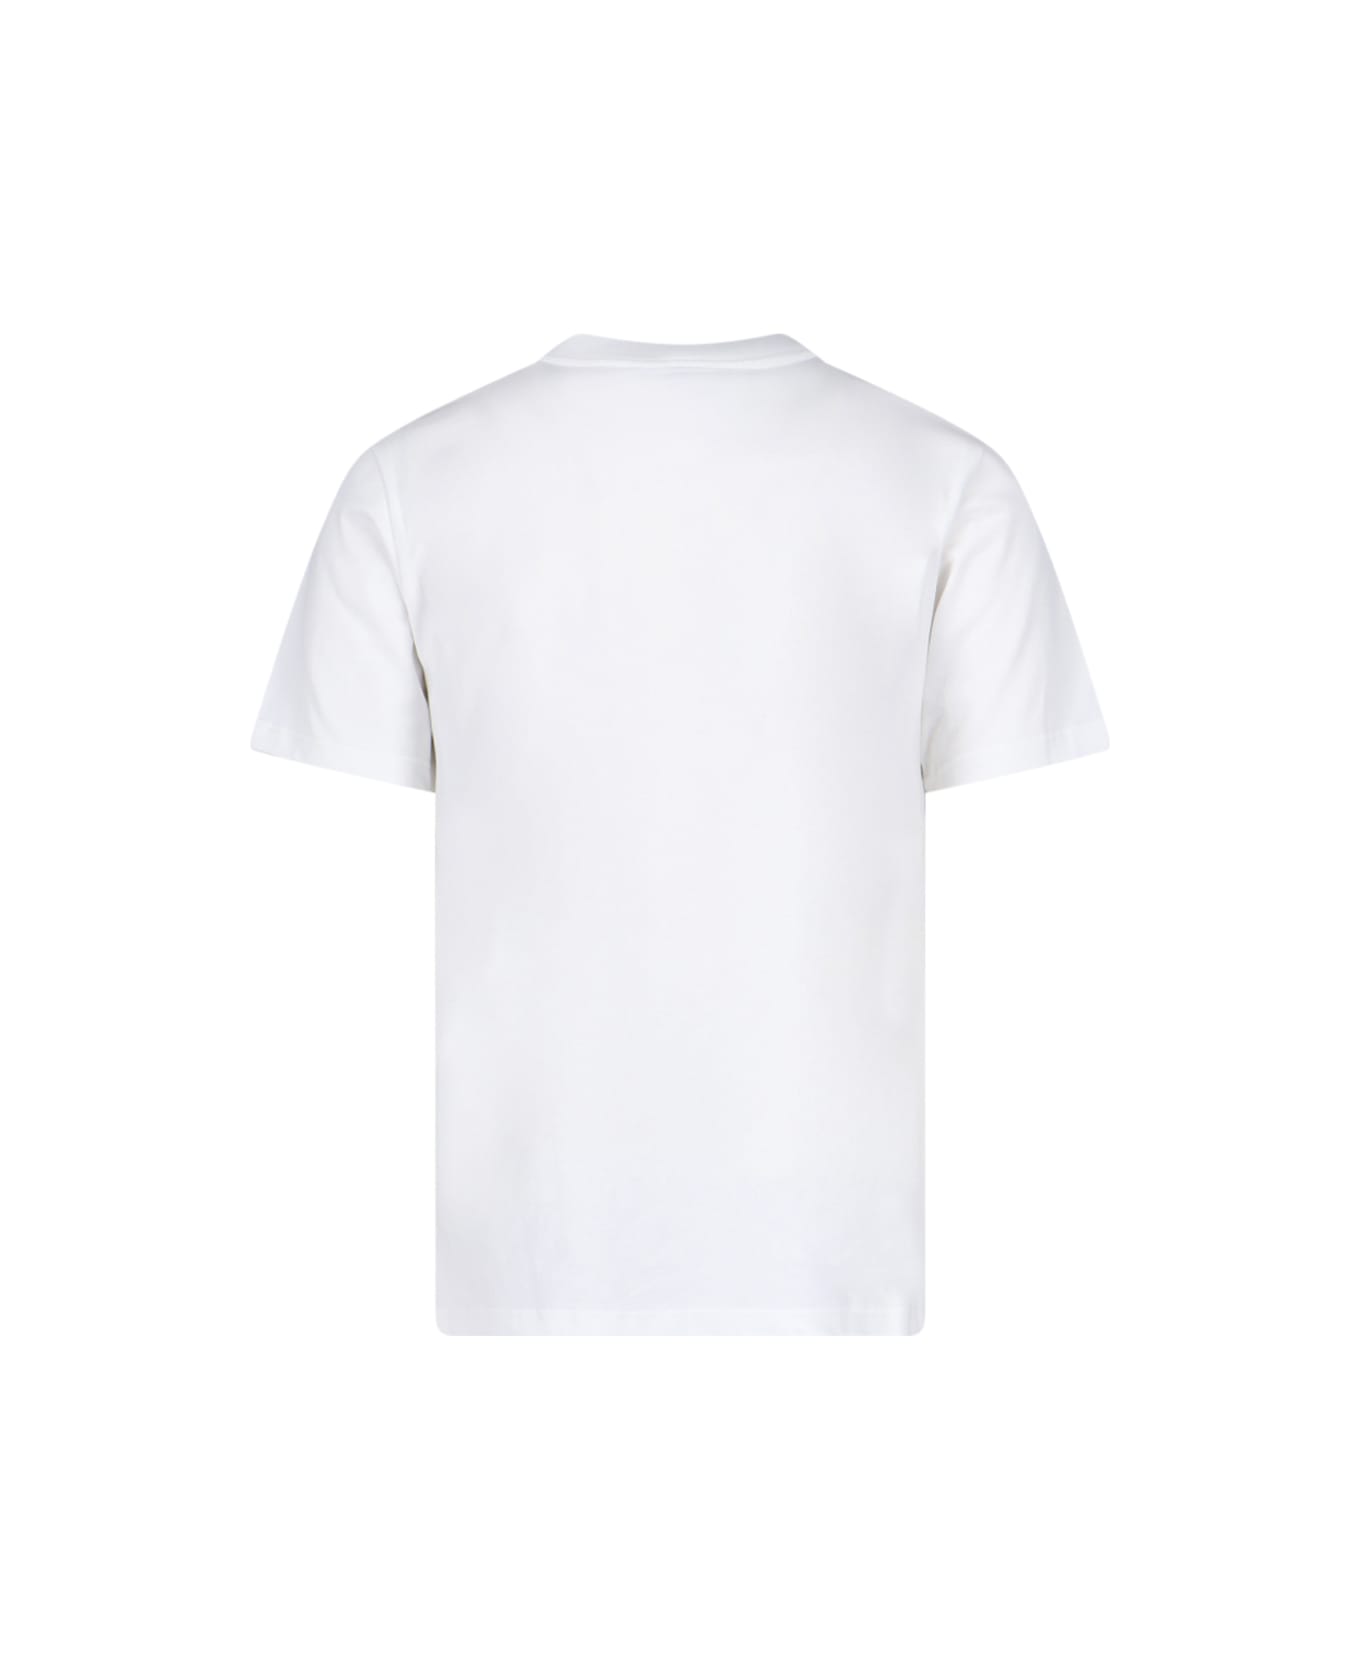 Casablanca 'terrain D'orange' T-shirt - White シャツ